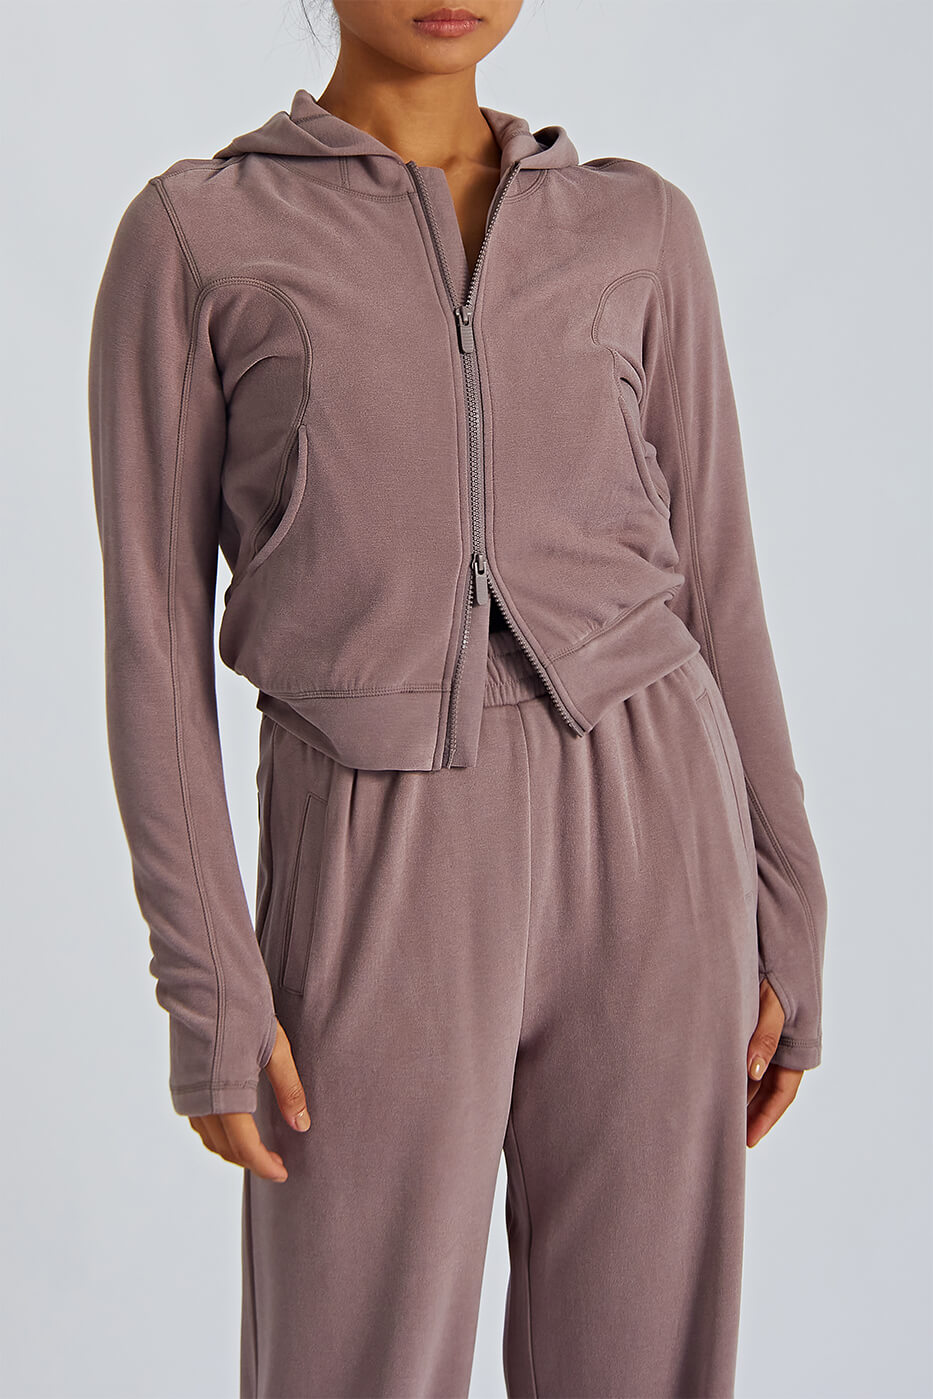 Casual Cardigan Soft Hooded Zipper Sport Top Autumn Skin-friendly Slim Short Pants Jacket Set Women